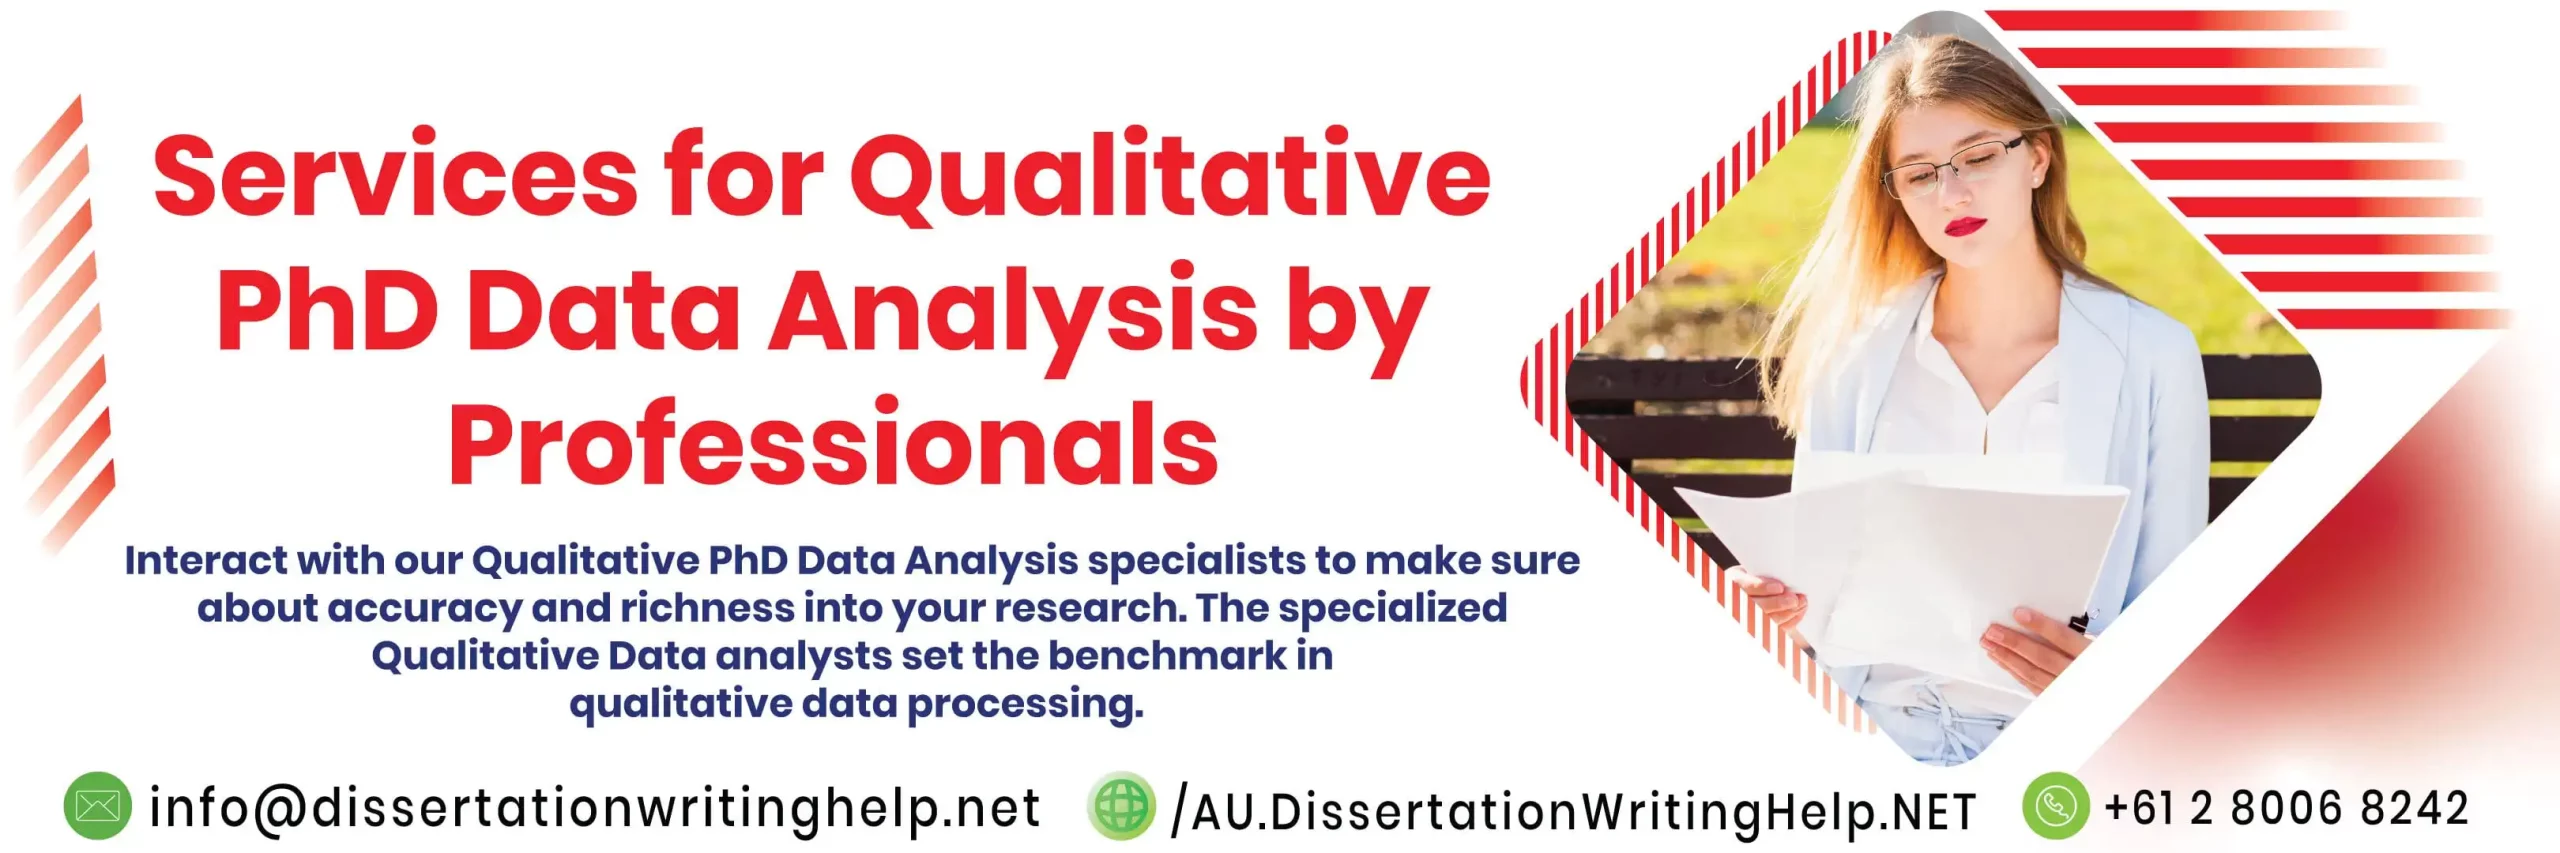 Qualitative PhD Data Analysis Services